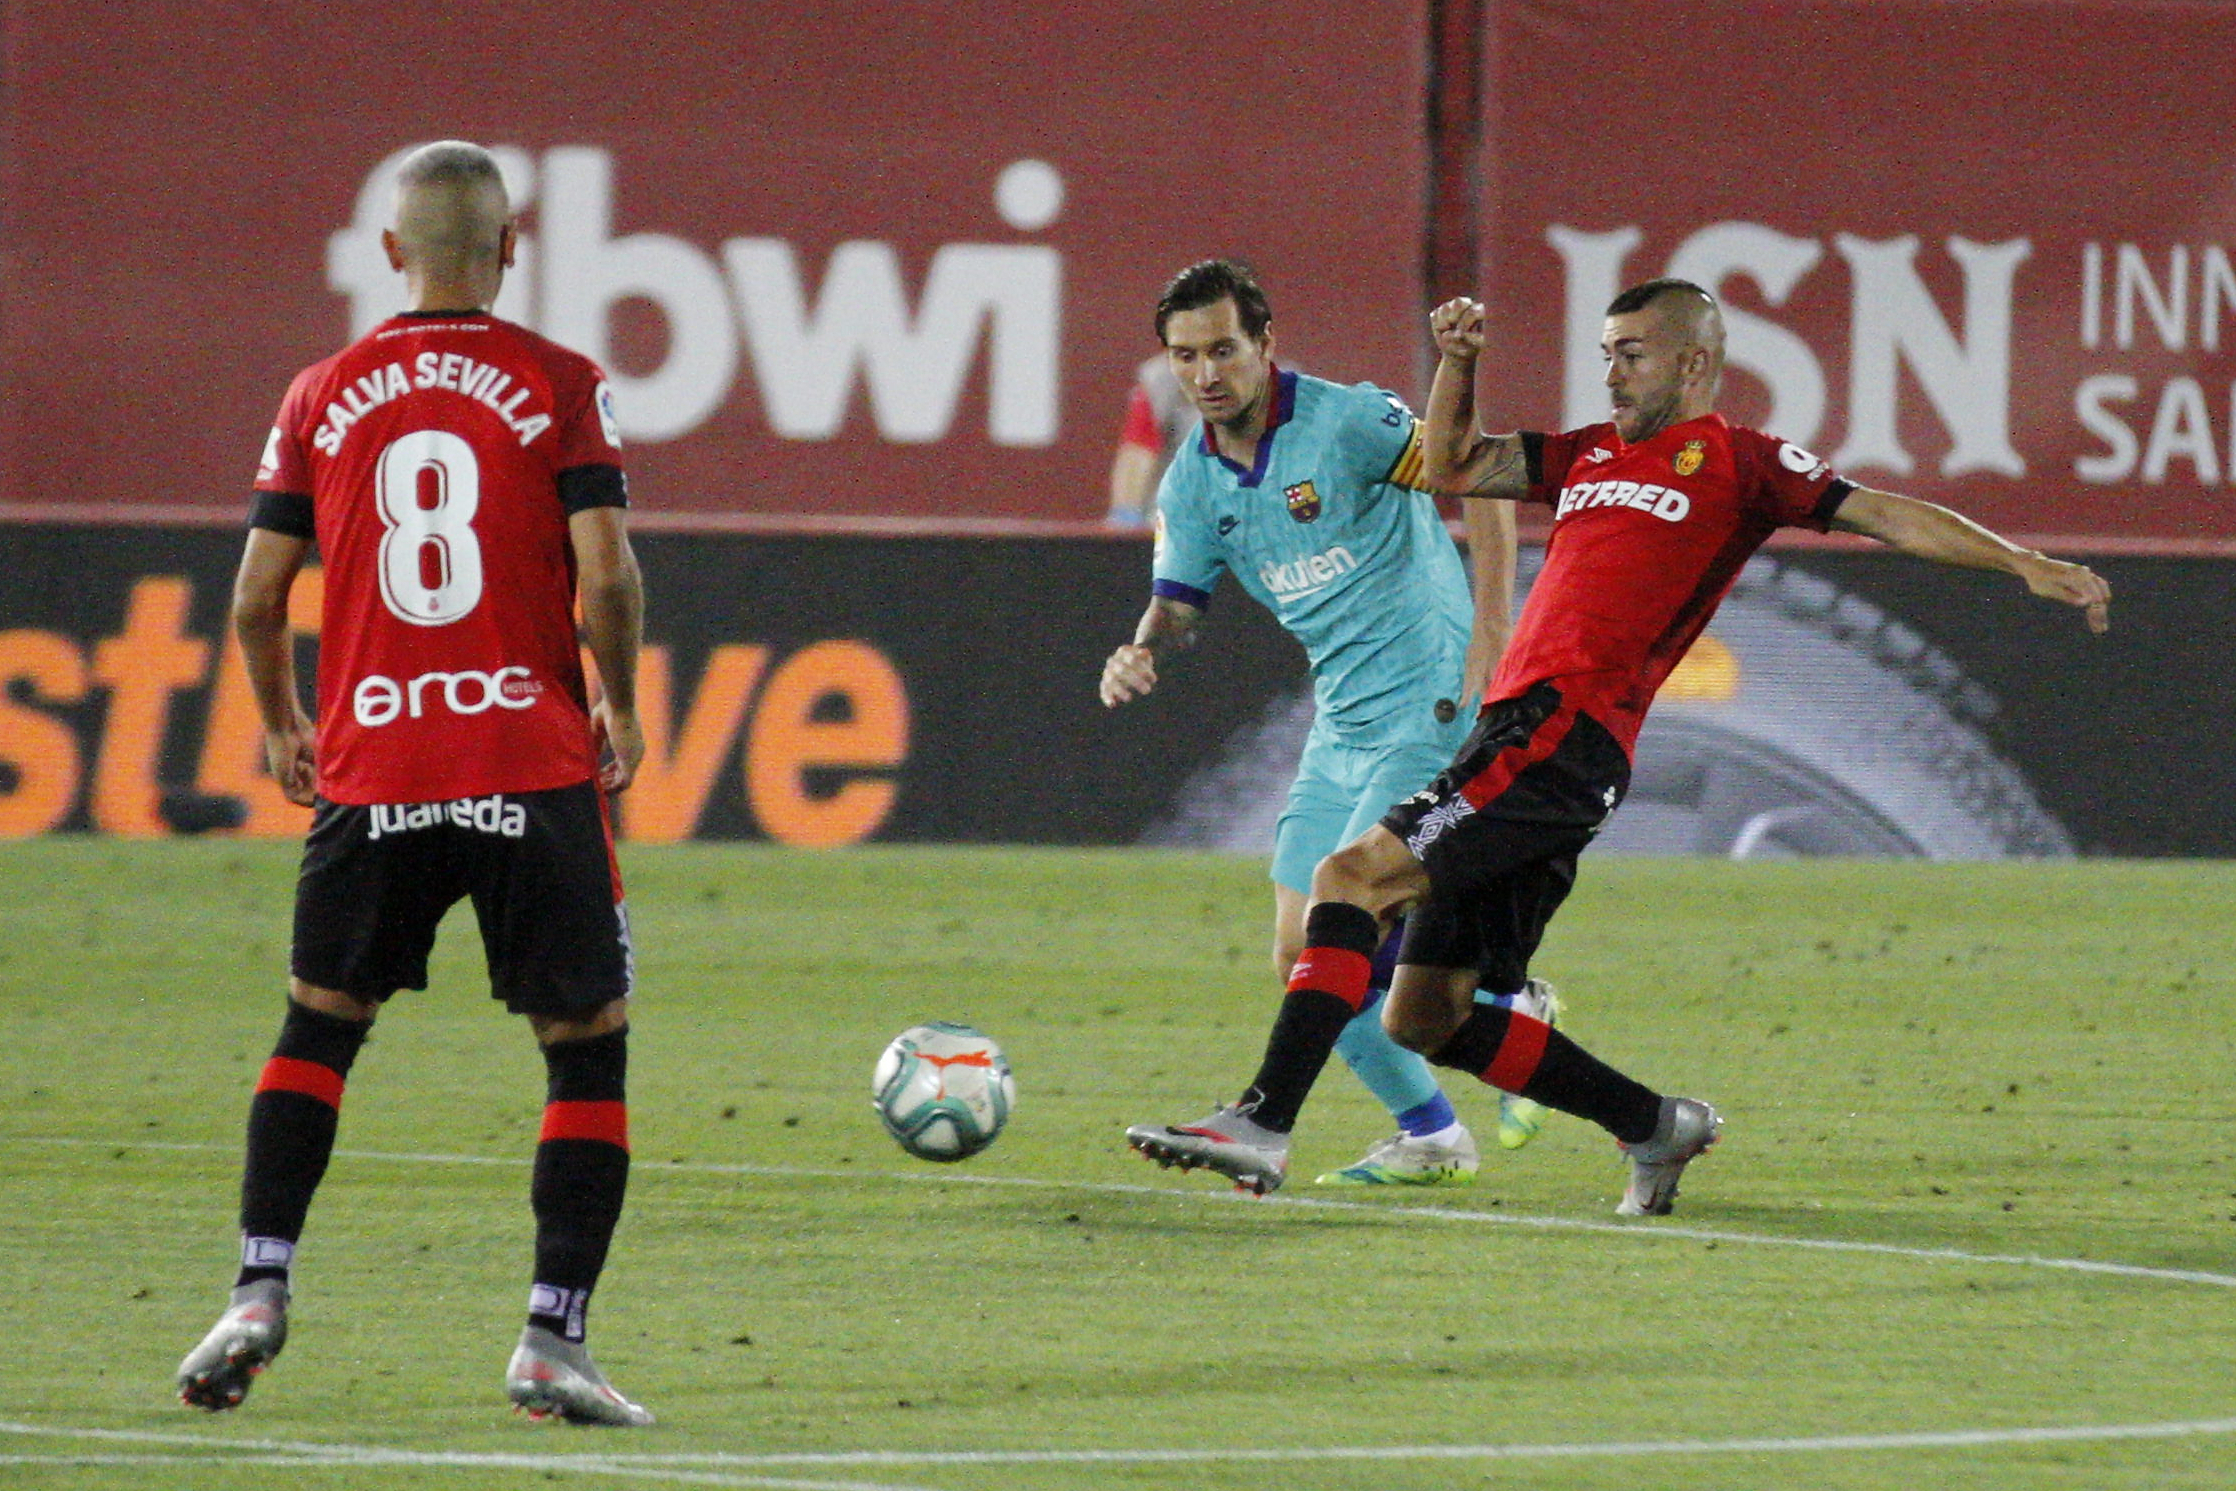 La Liga: Martin Valjent čelil FC Barcelona, Mallorca však neuspela |  Šport.sk